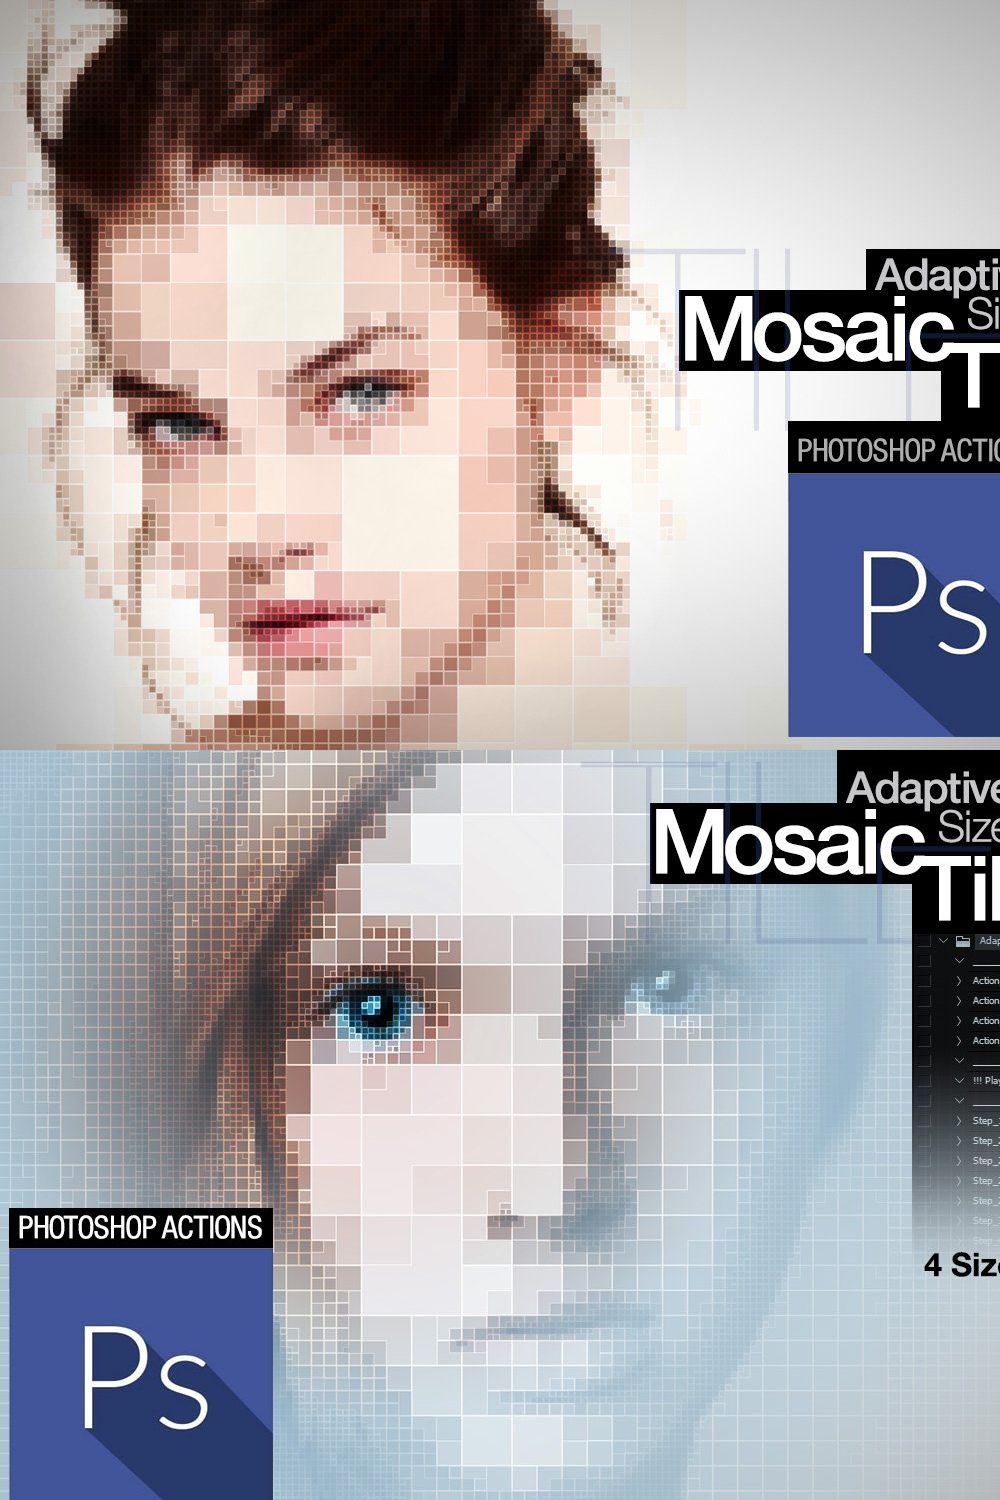 Adaptive Size Mosaic Tiles pinterest preview image.